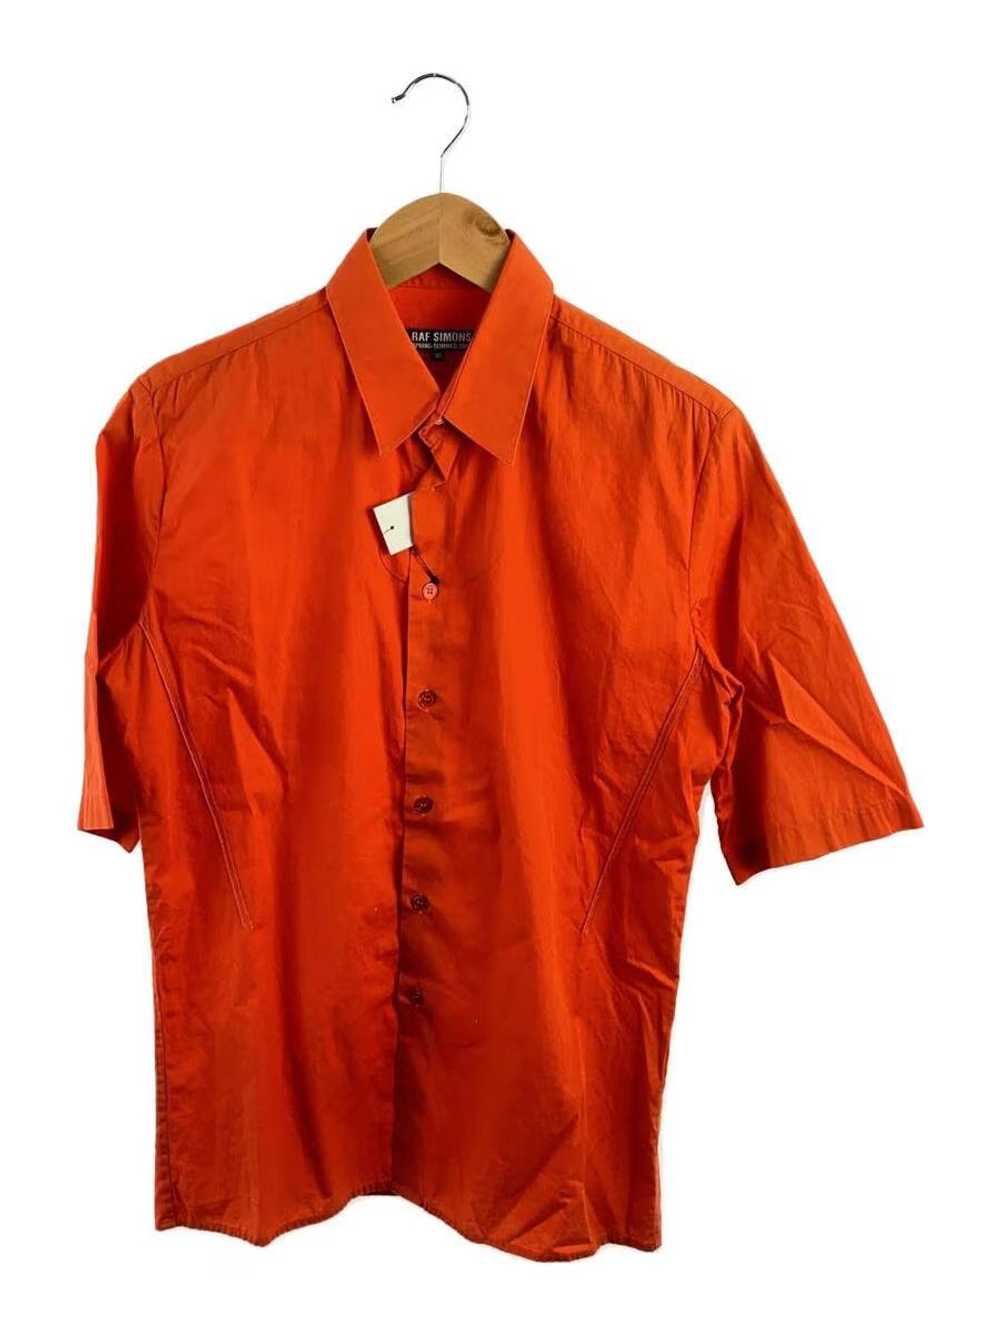 Raf Simons SS07 Short Sleeve Button Shirt - image 1